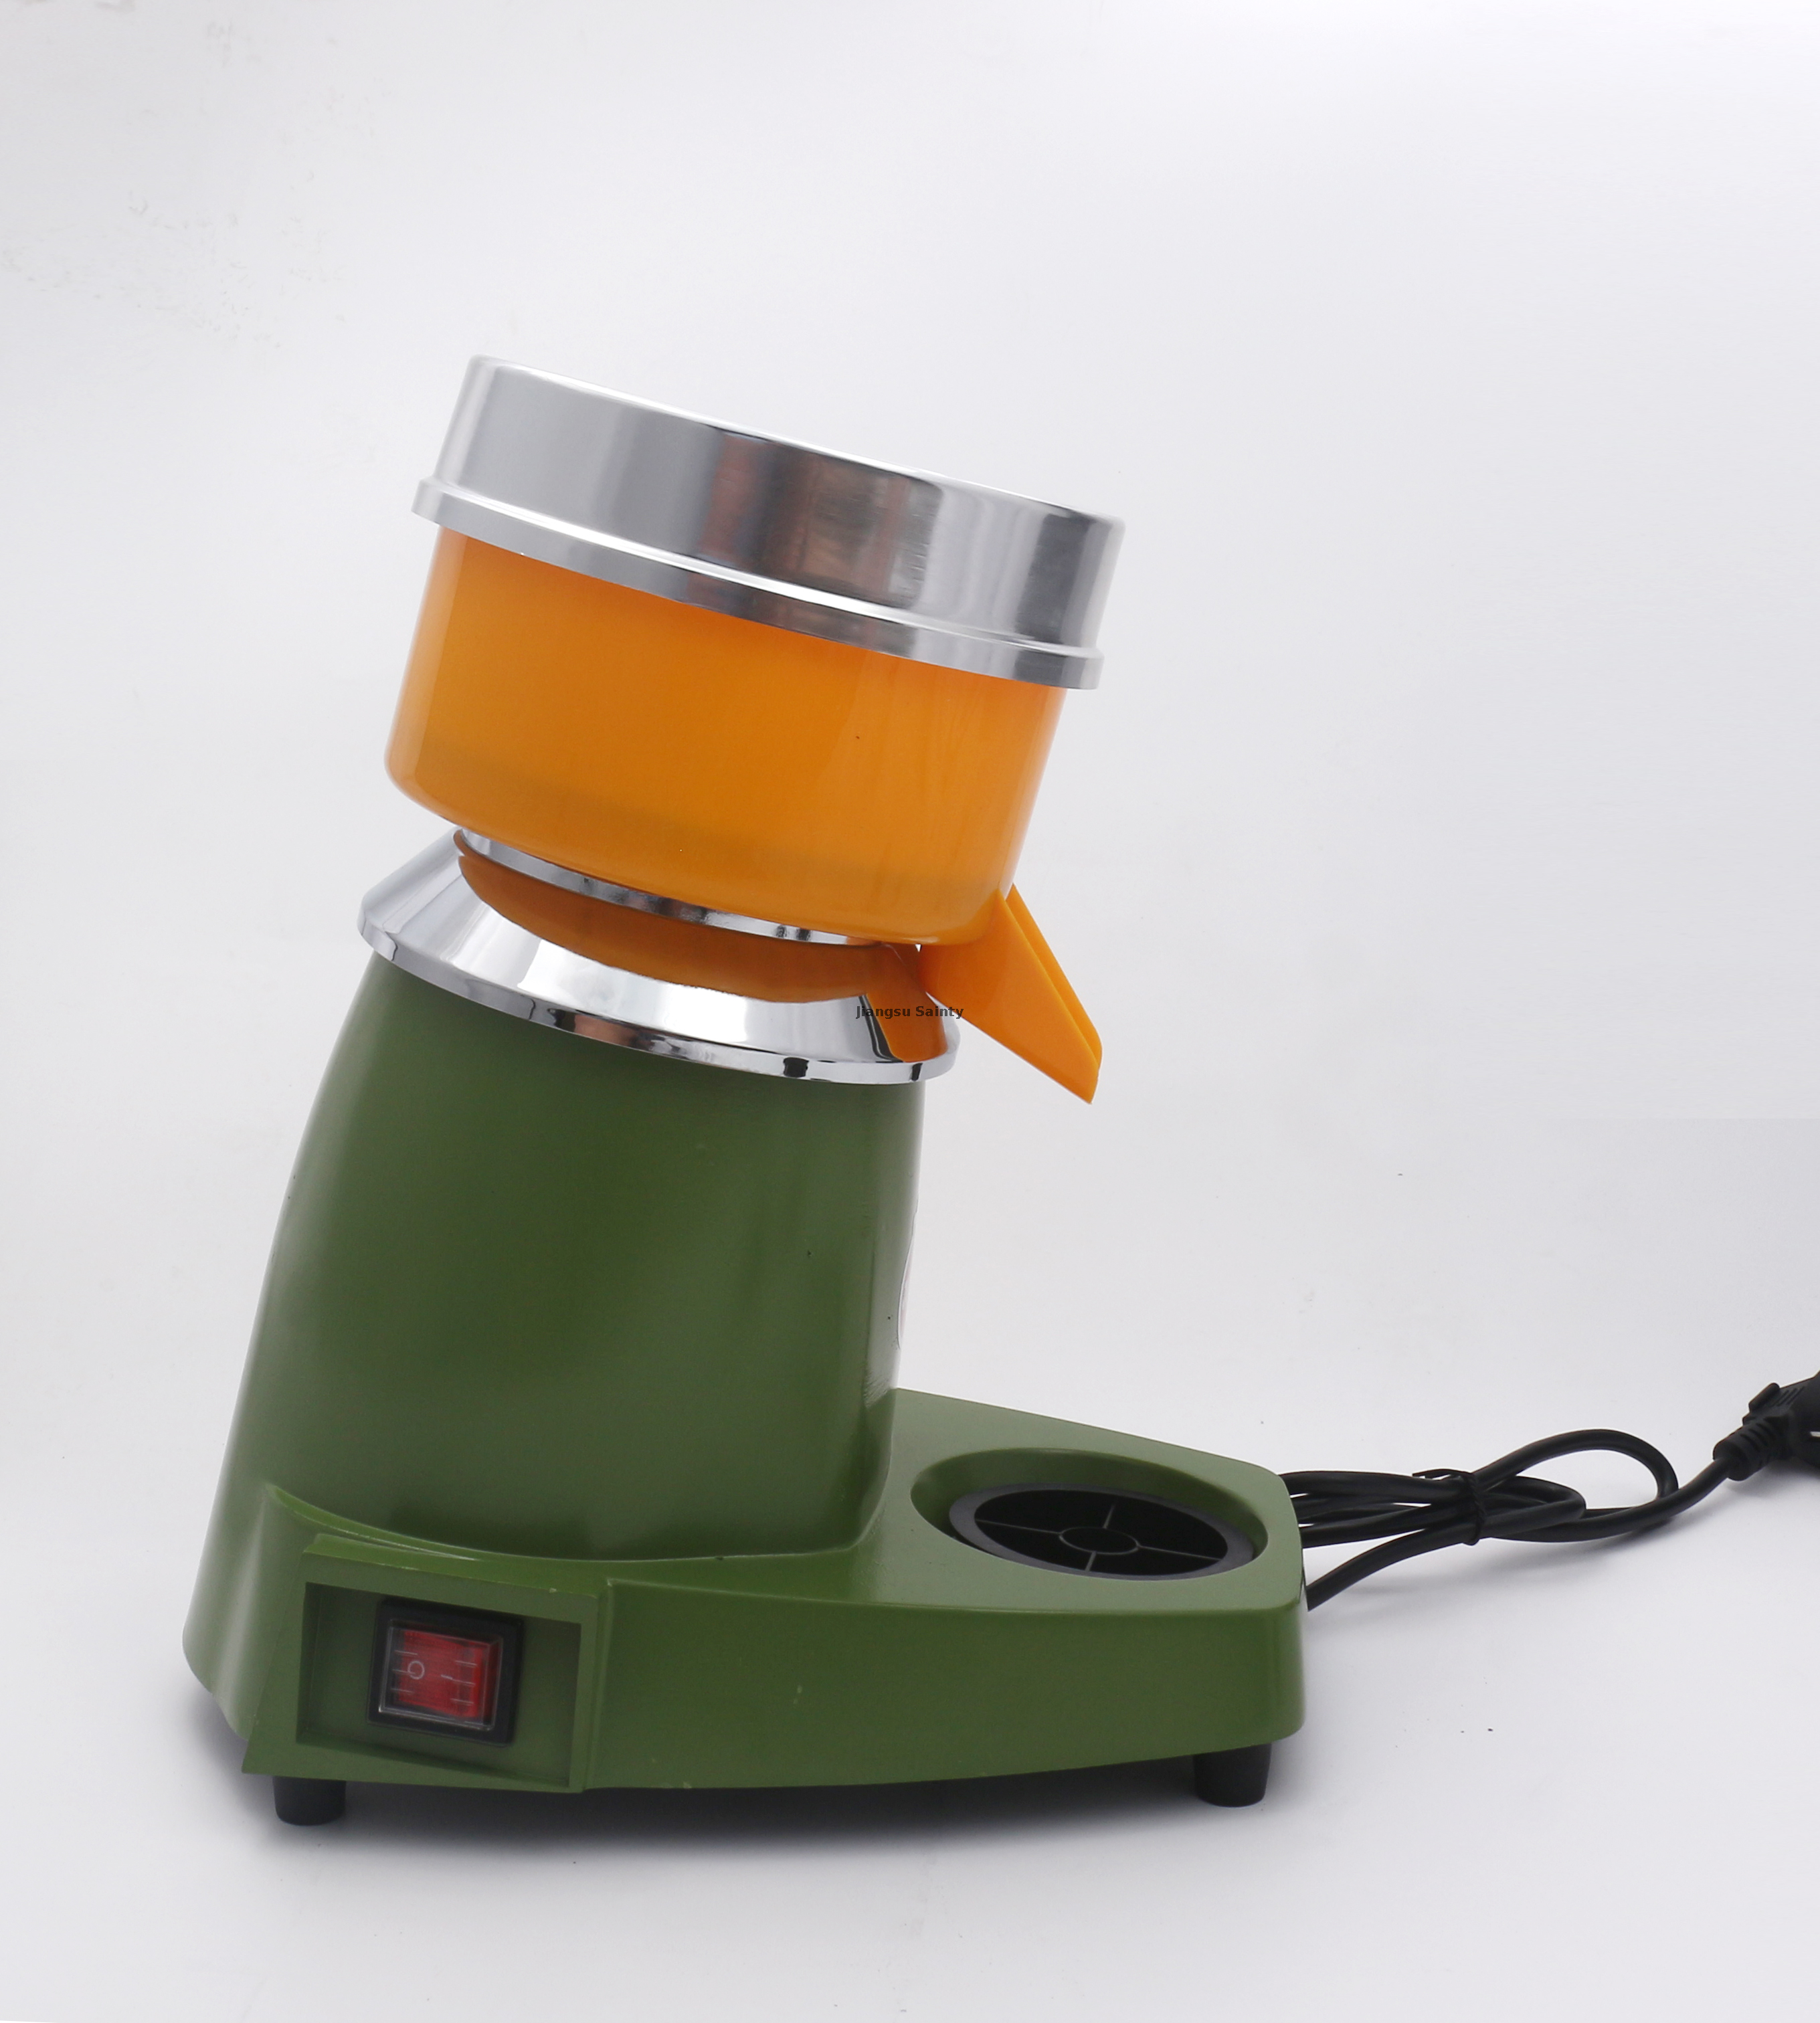 Portable Mini Stainless Steel Orange Juicer